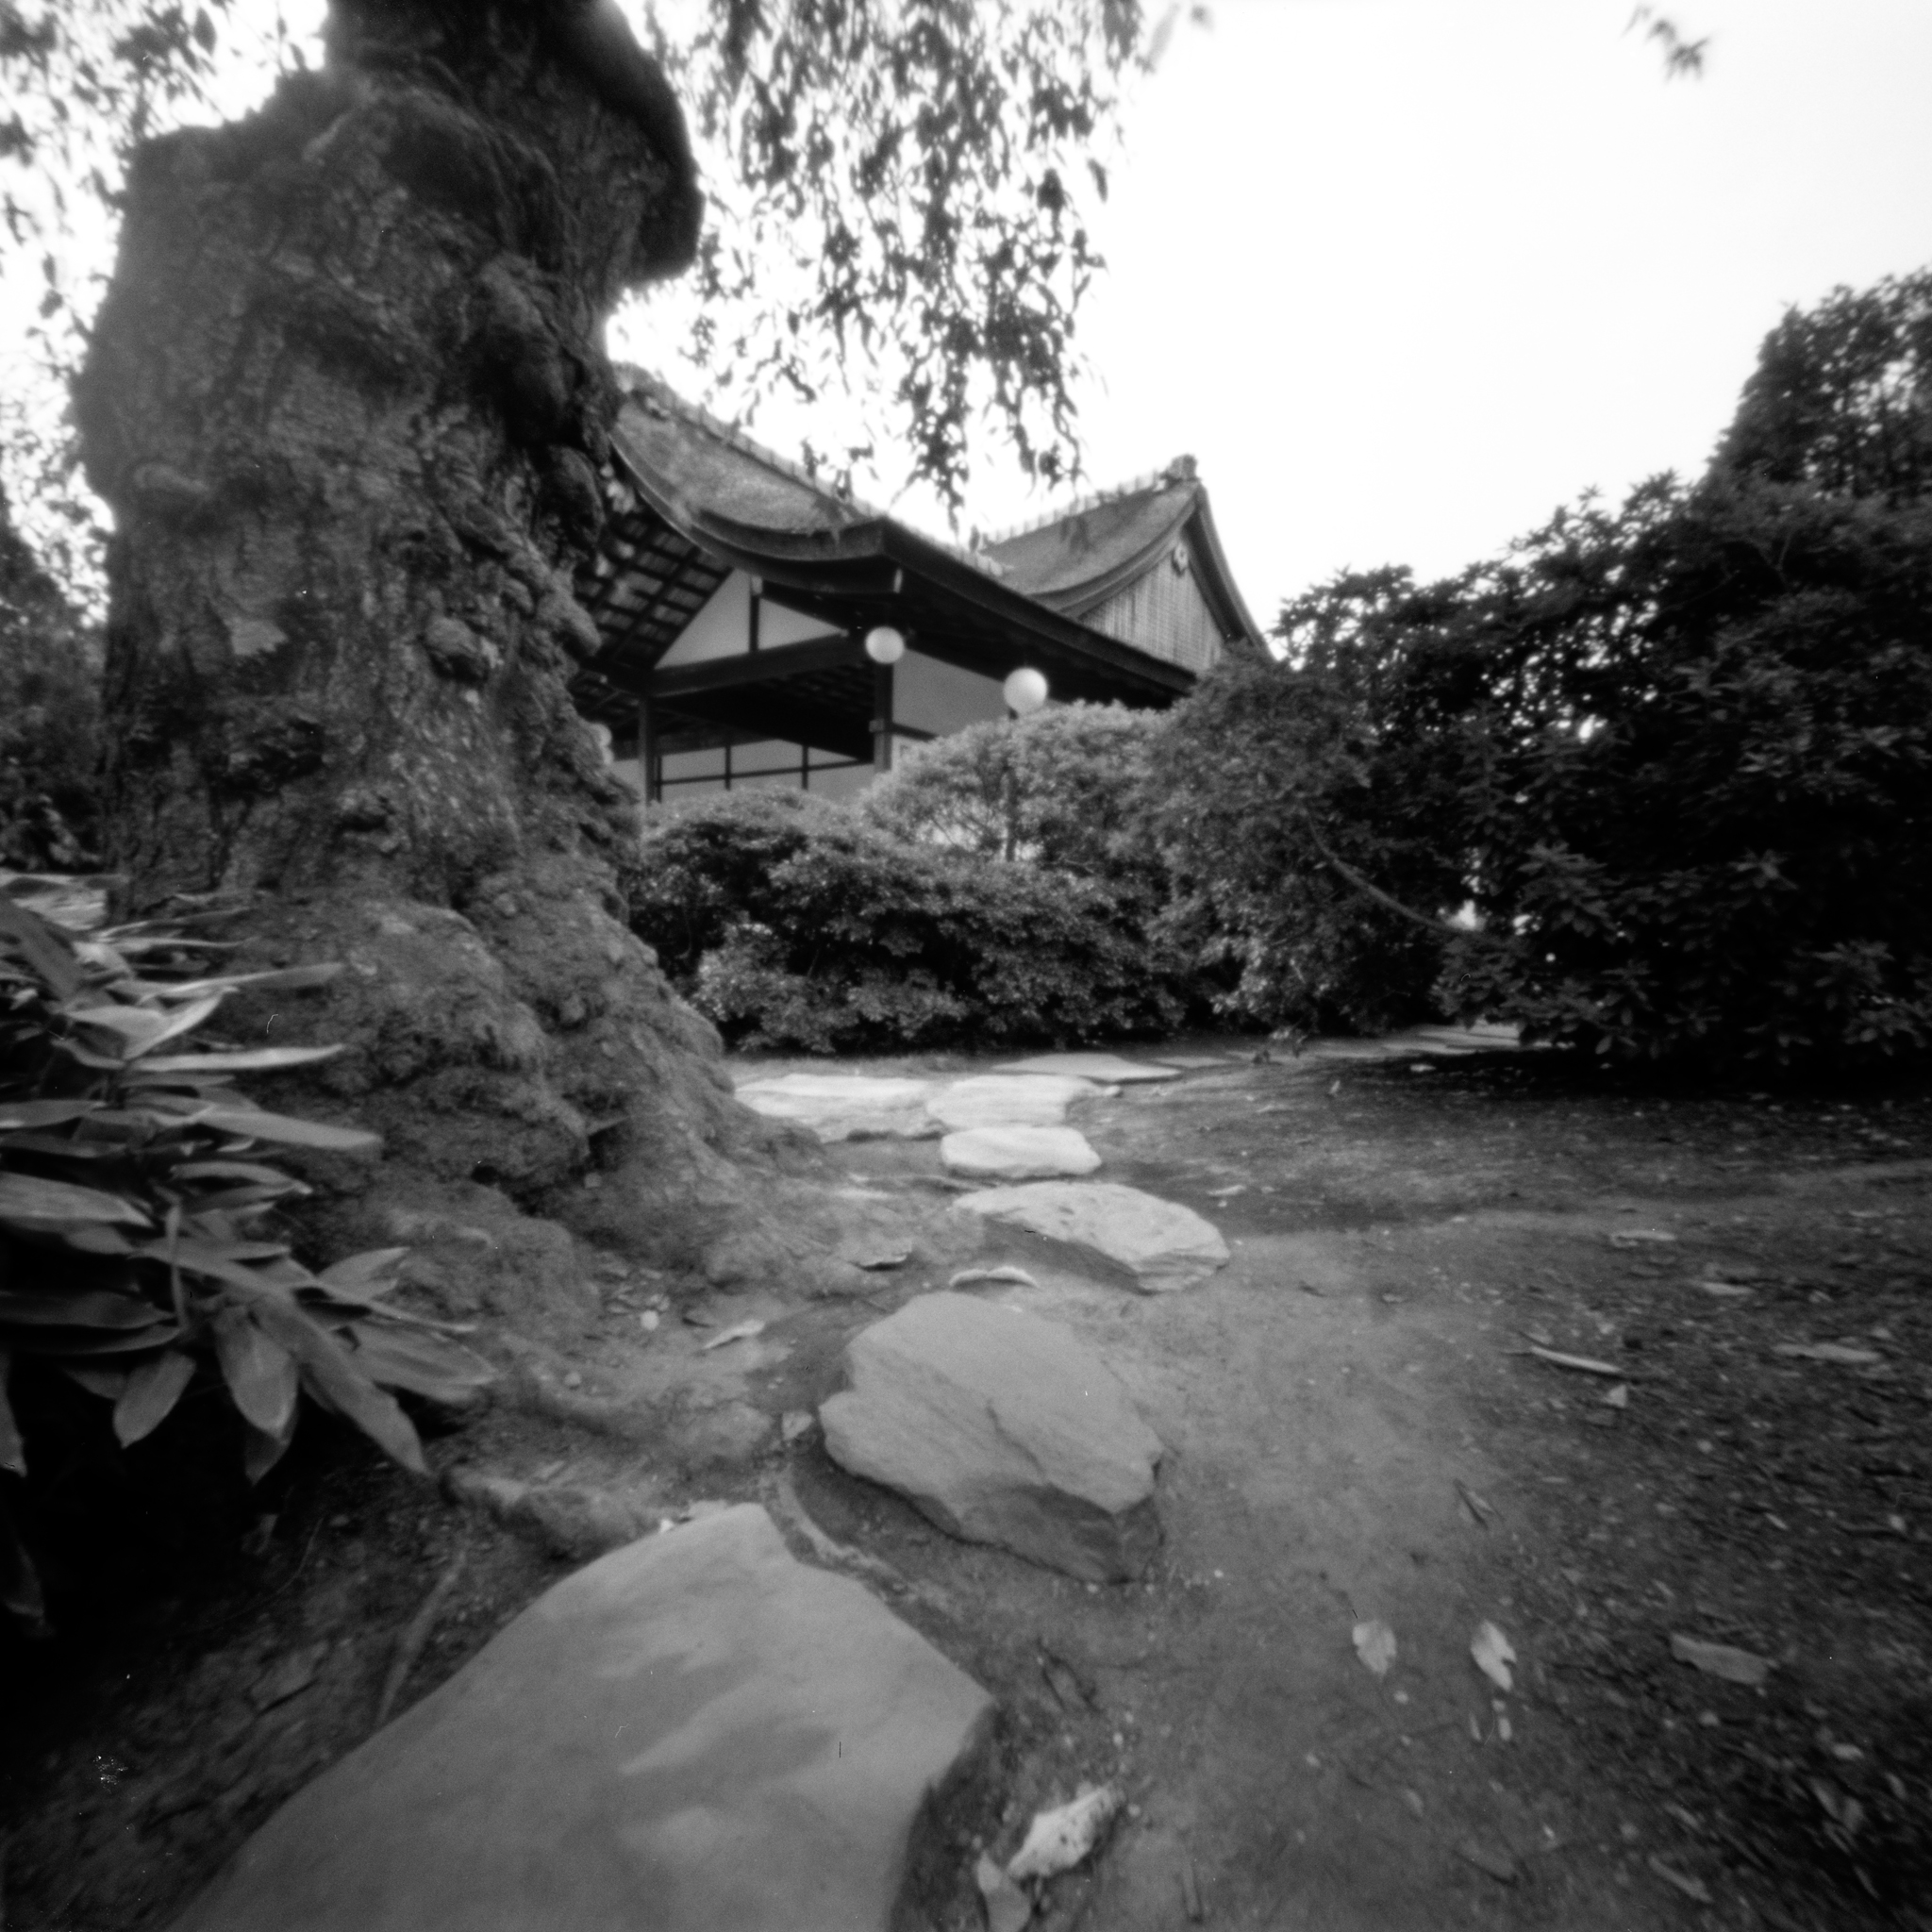  Shofuso Japanese House and Garden.&nbsp; Philadelphia, Pennsylvania.&nbsp; Zero image 2000 6x6. 